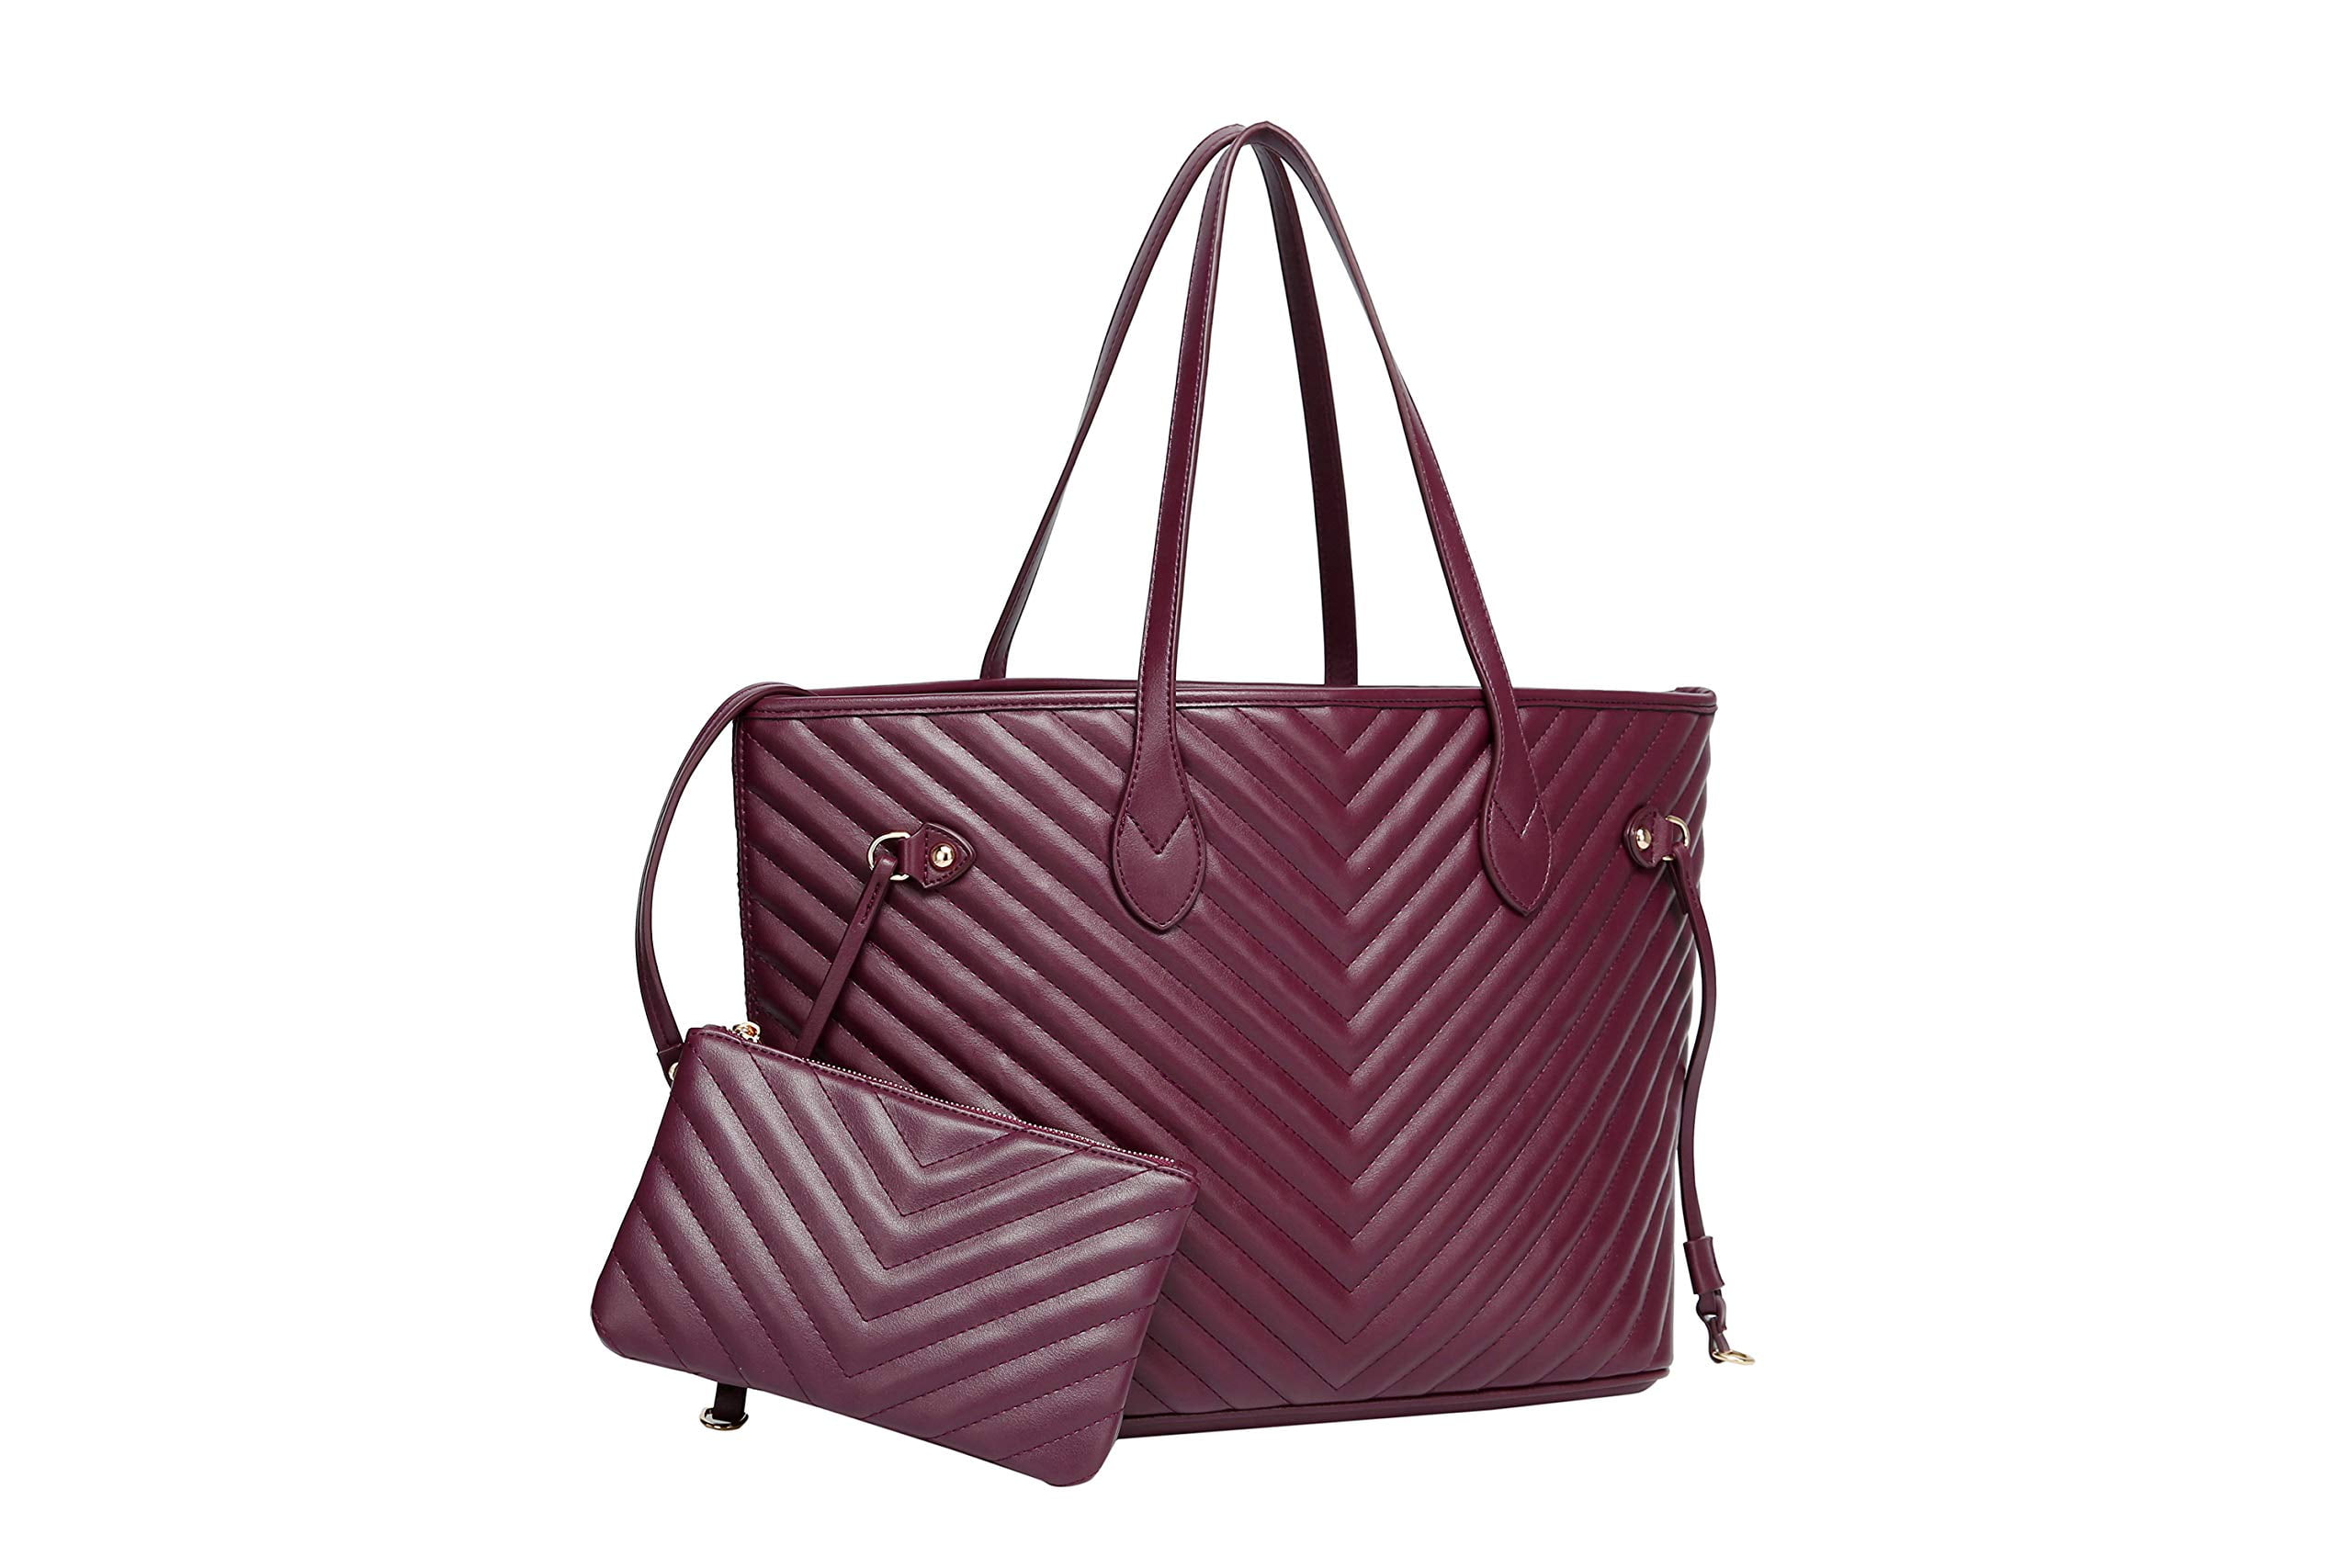 LOUIS.DAISY Women Tote Bags Fashion Handbags Shoulder Bag Satchel Bags Purses, Vegan Leather Crossbody Bags Top-Handle Bags